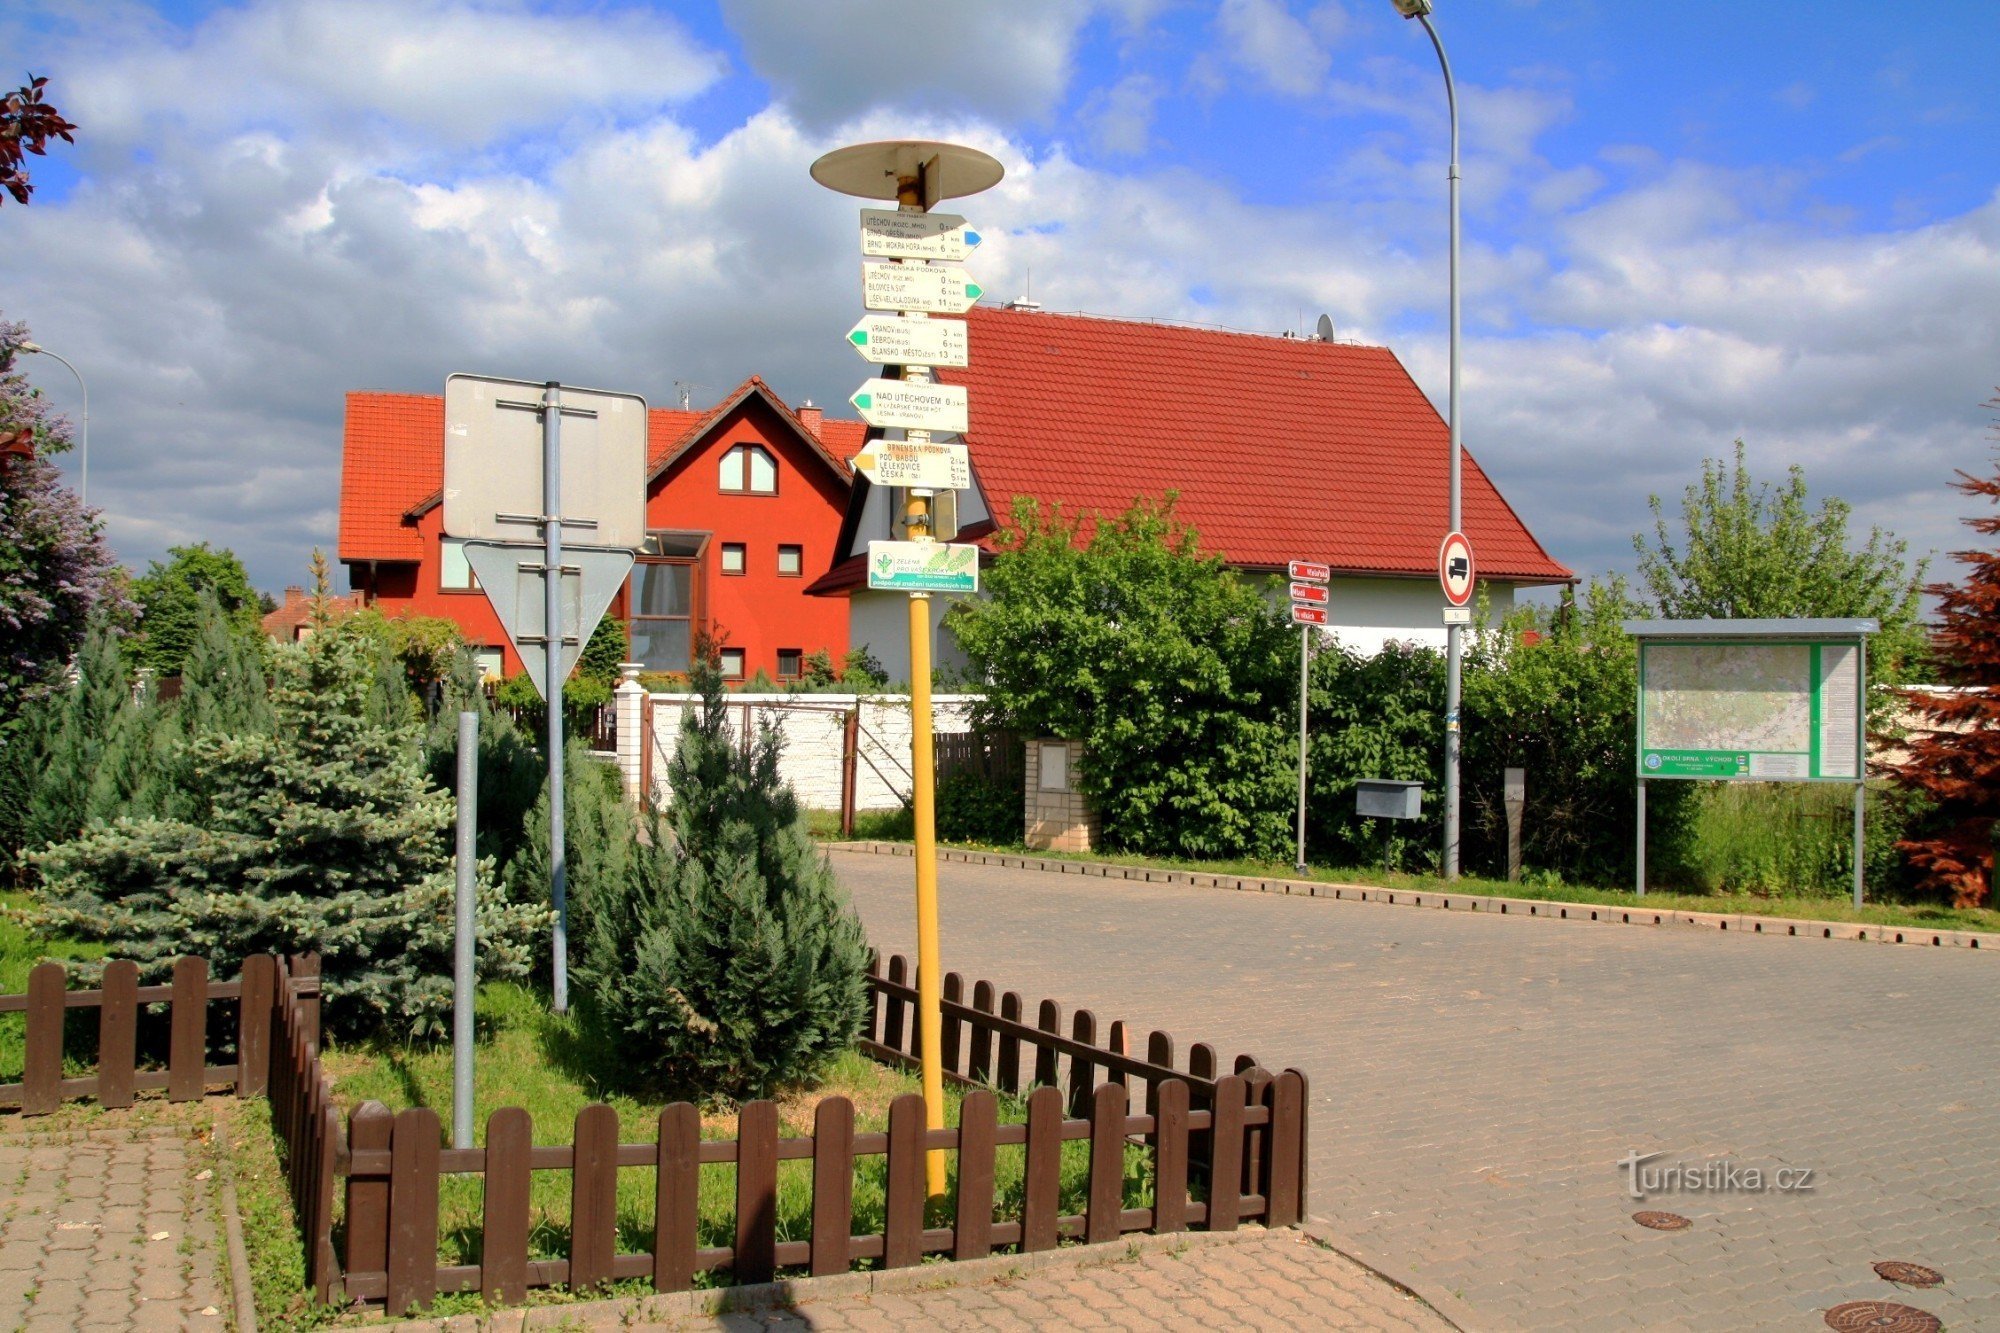 The main tourist signpost in Útěchov